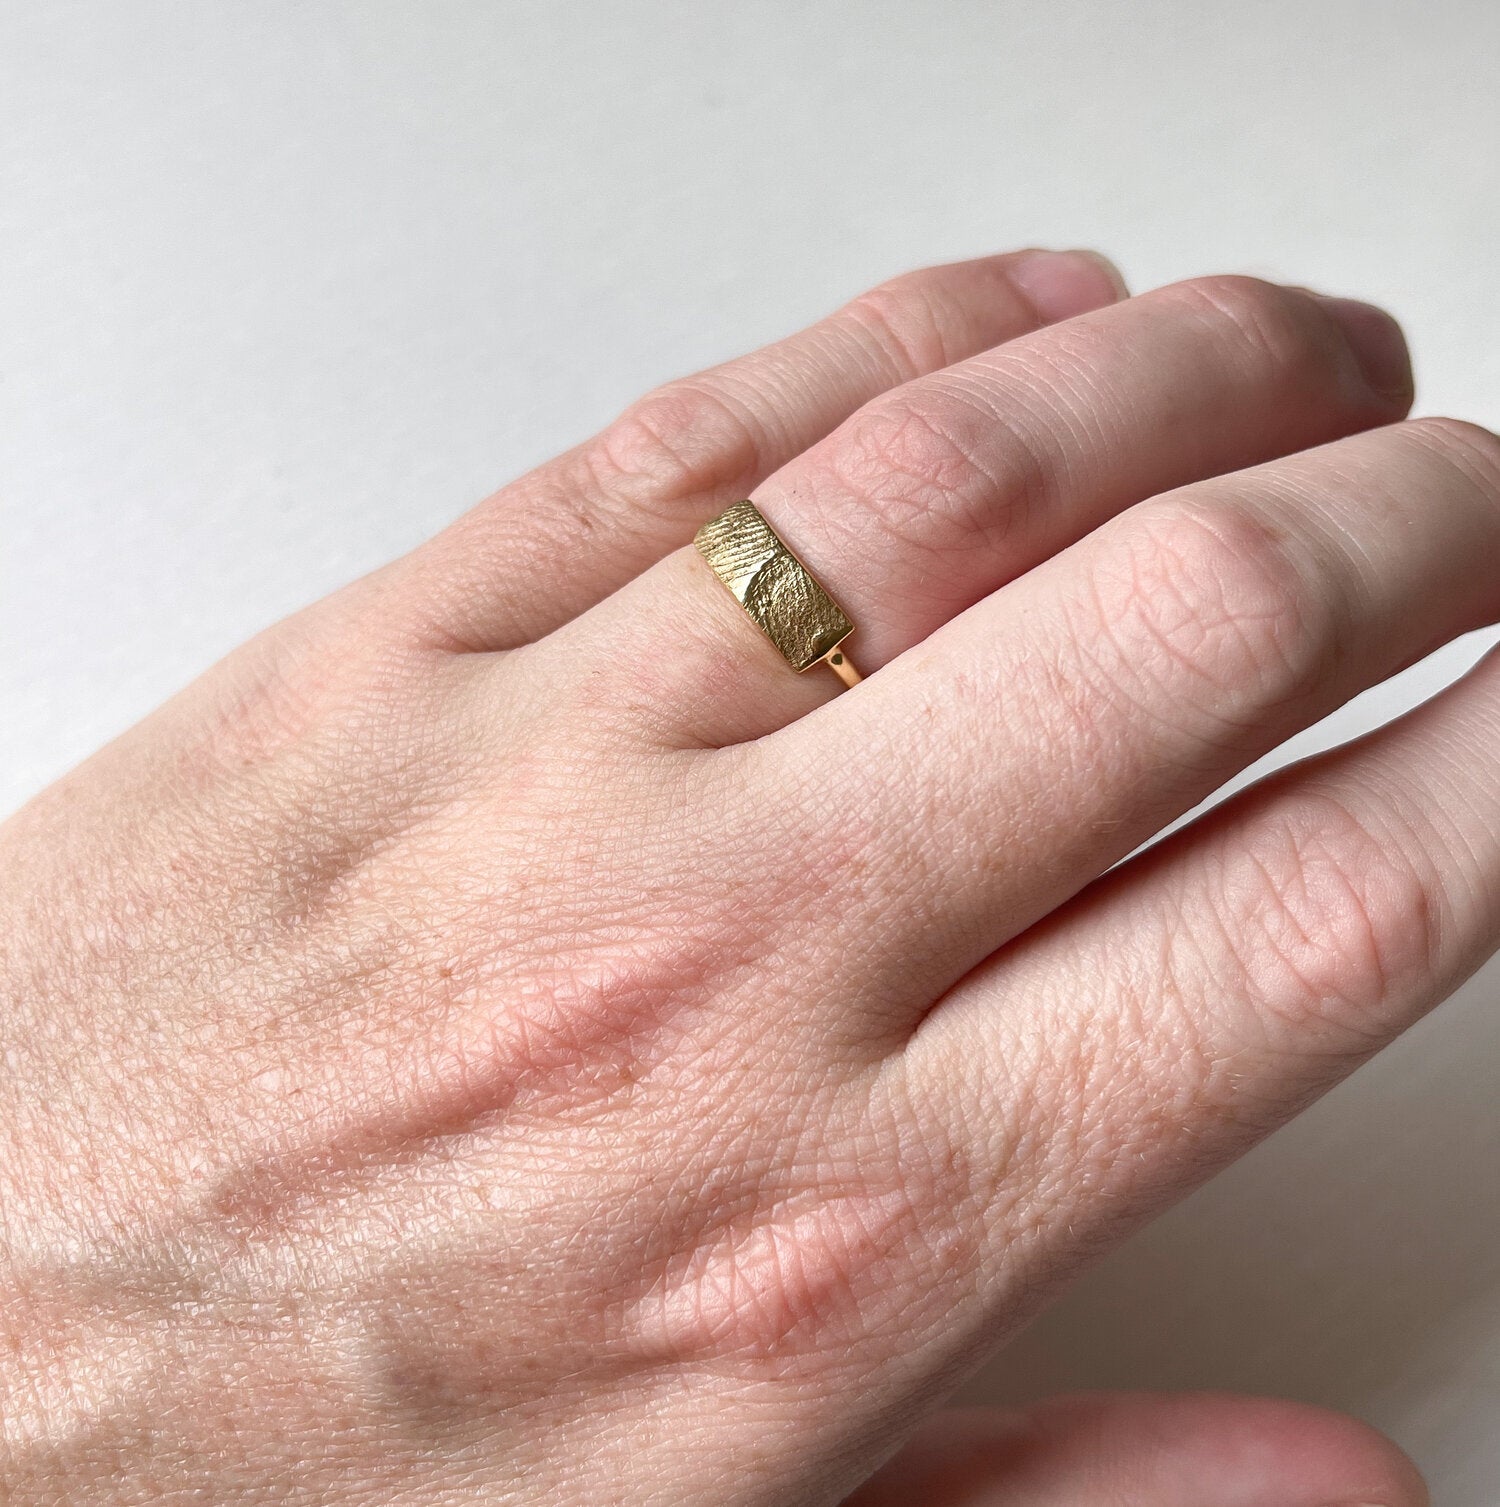 Bar Fingerprint Ring - 9ct Gold - Print Impression Kit + Ring